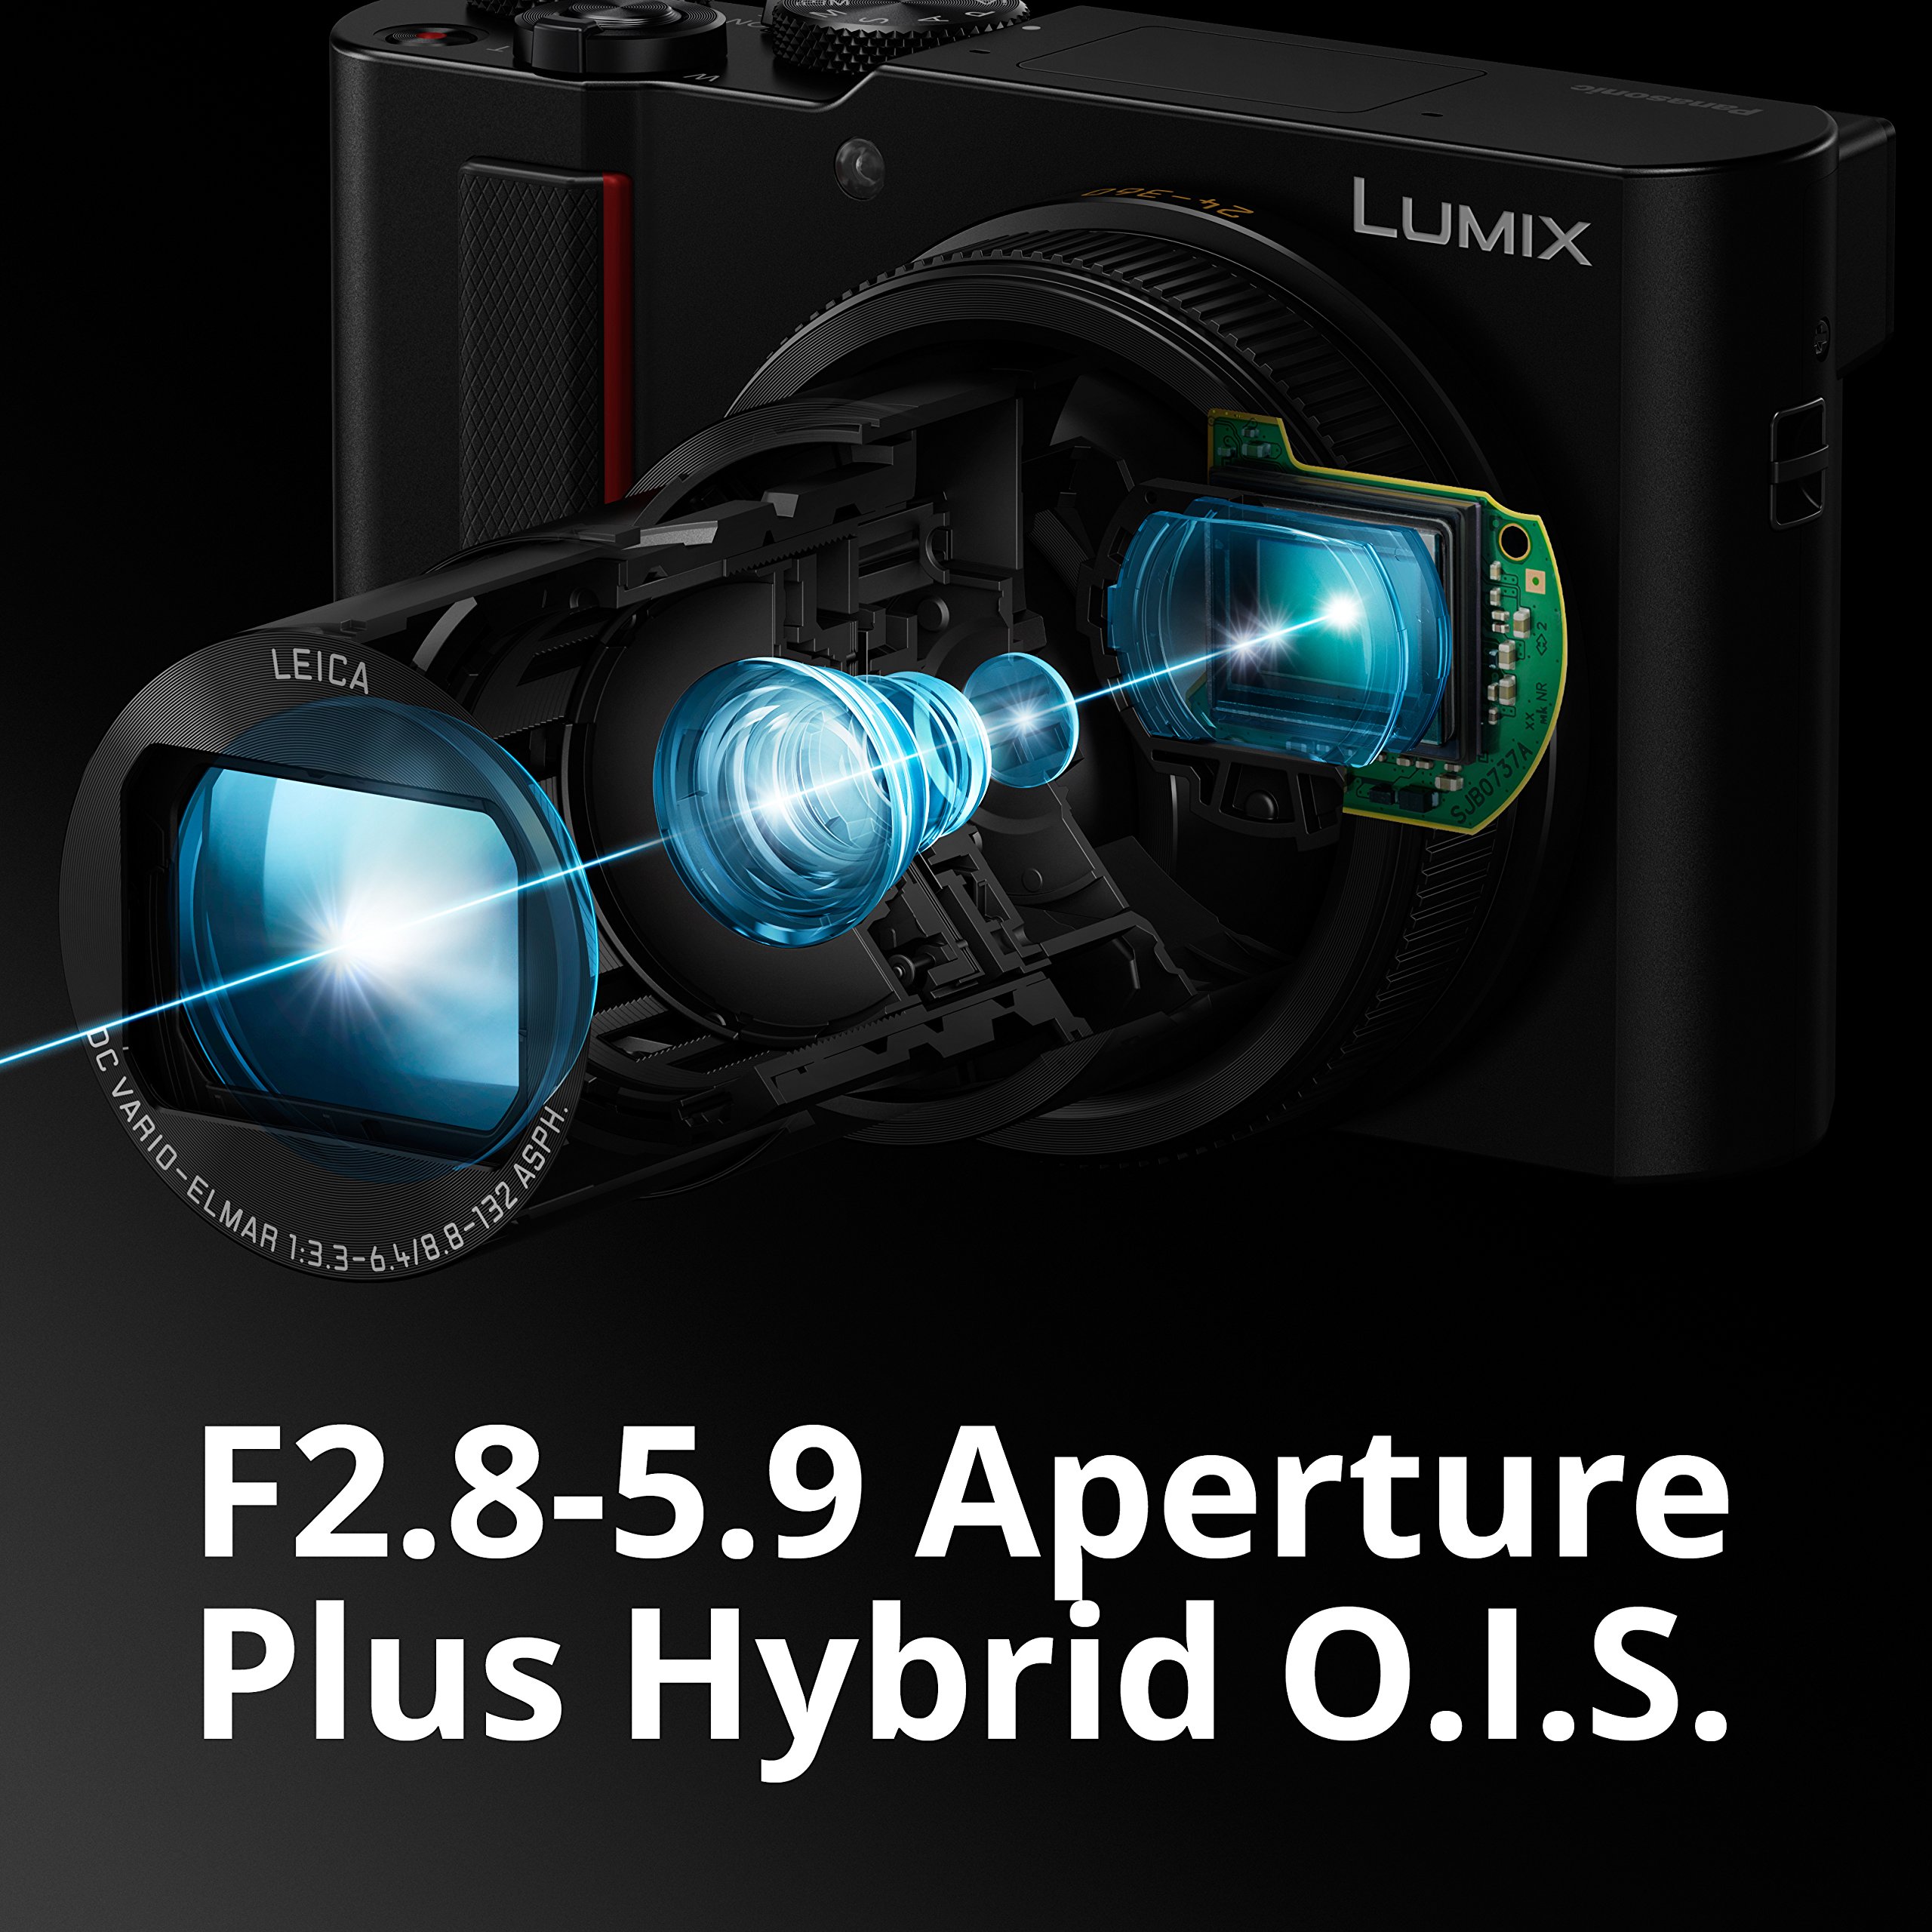 PANASONIC LUMIX ZS200 15X Leica DC Lens with Stabilization, 20.1 Megapixel, Large 1 inch Low Light Sensor (DC-ZS200S USA Silver)